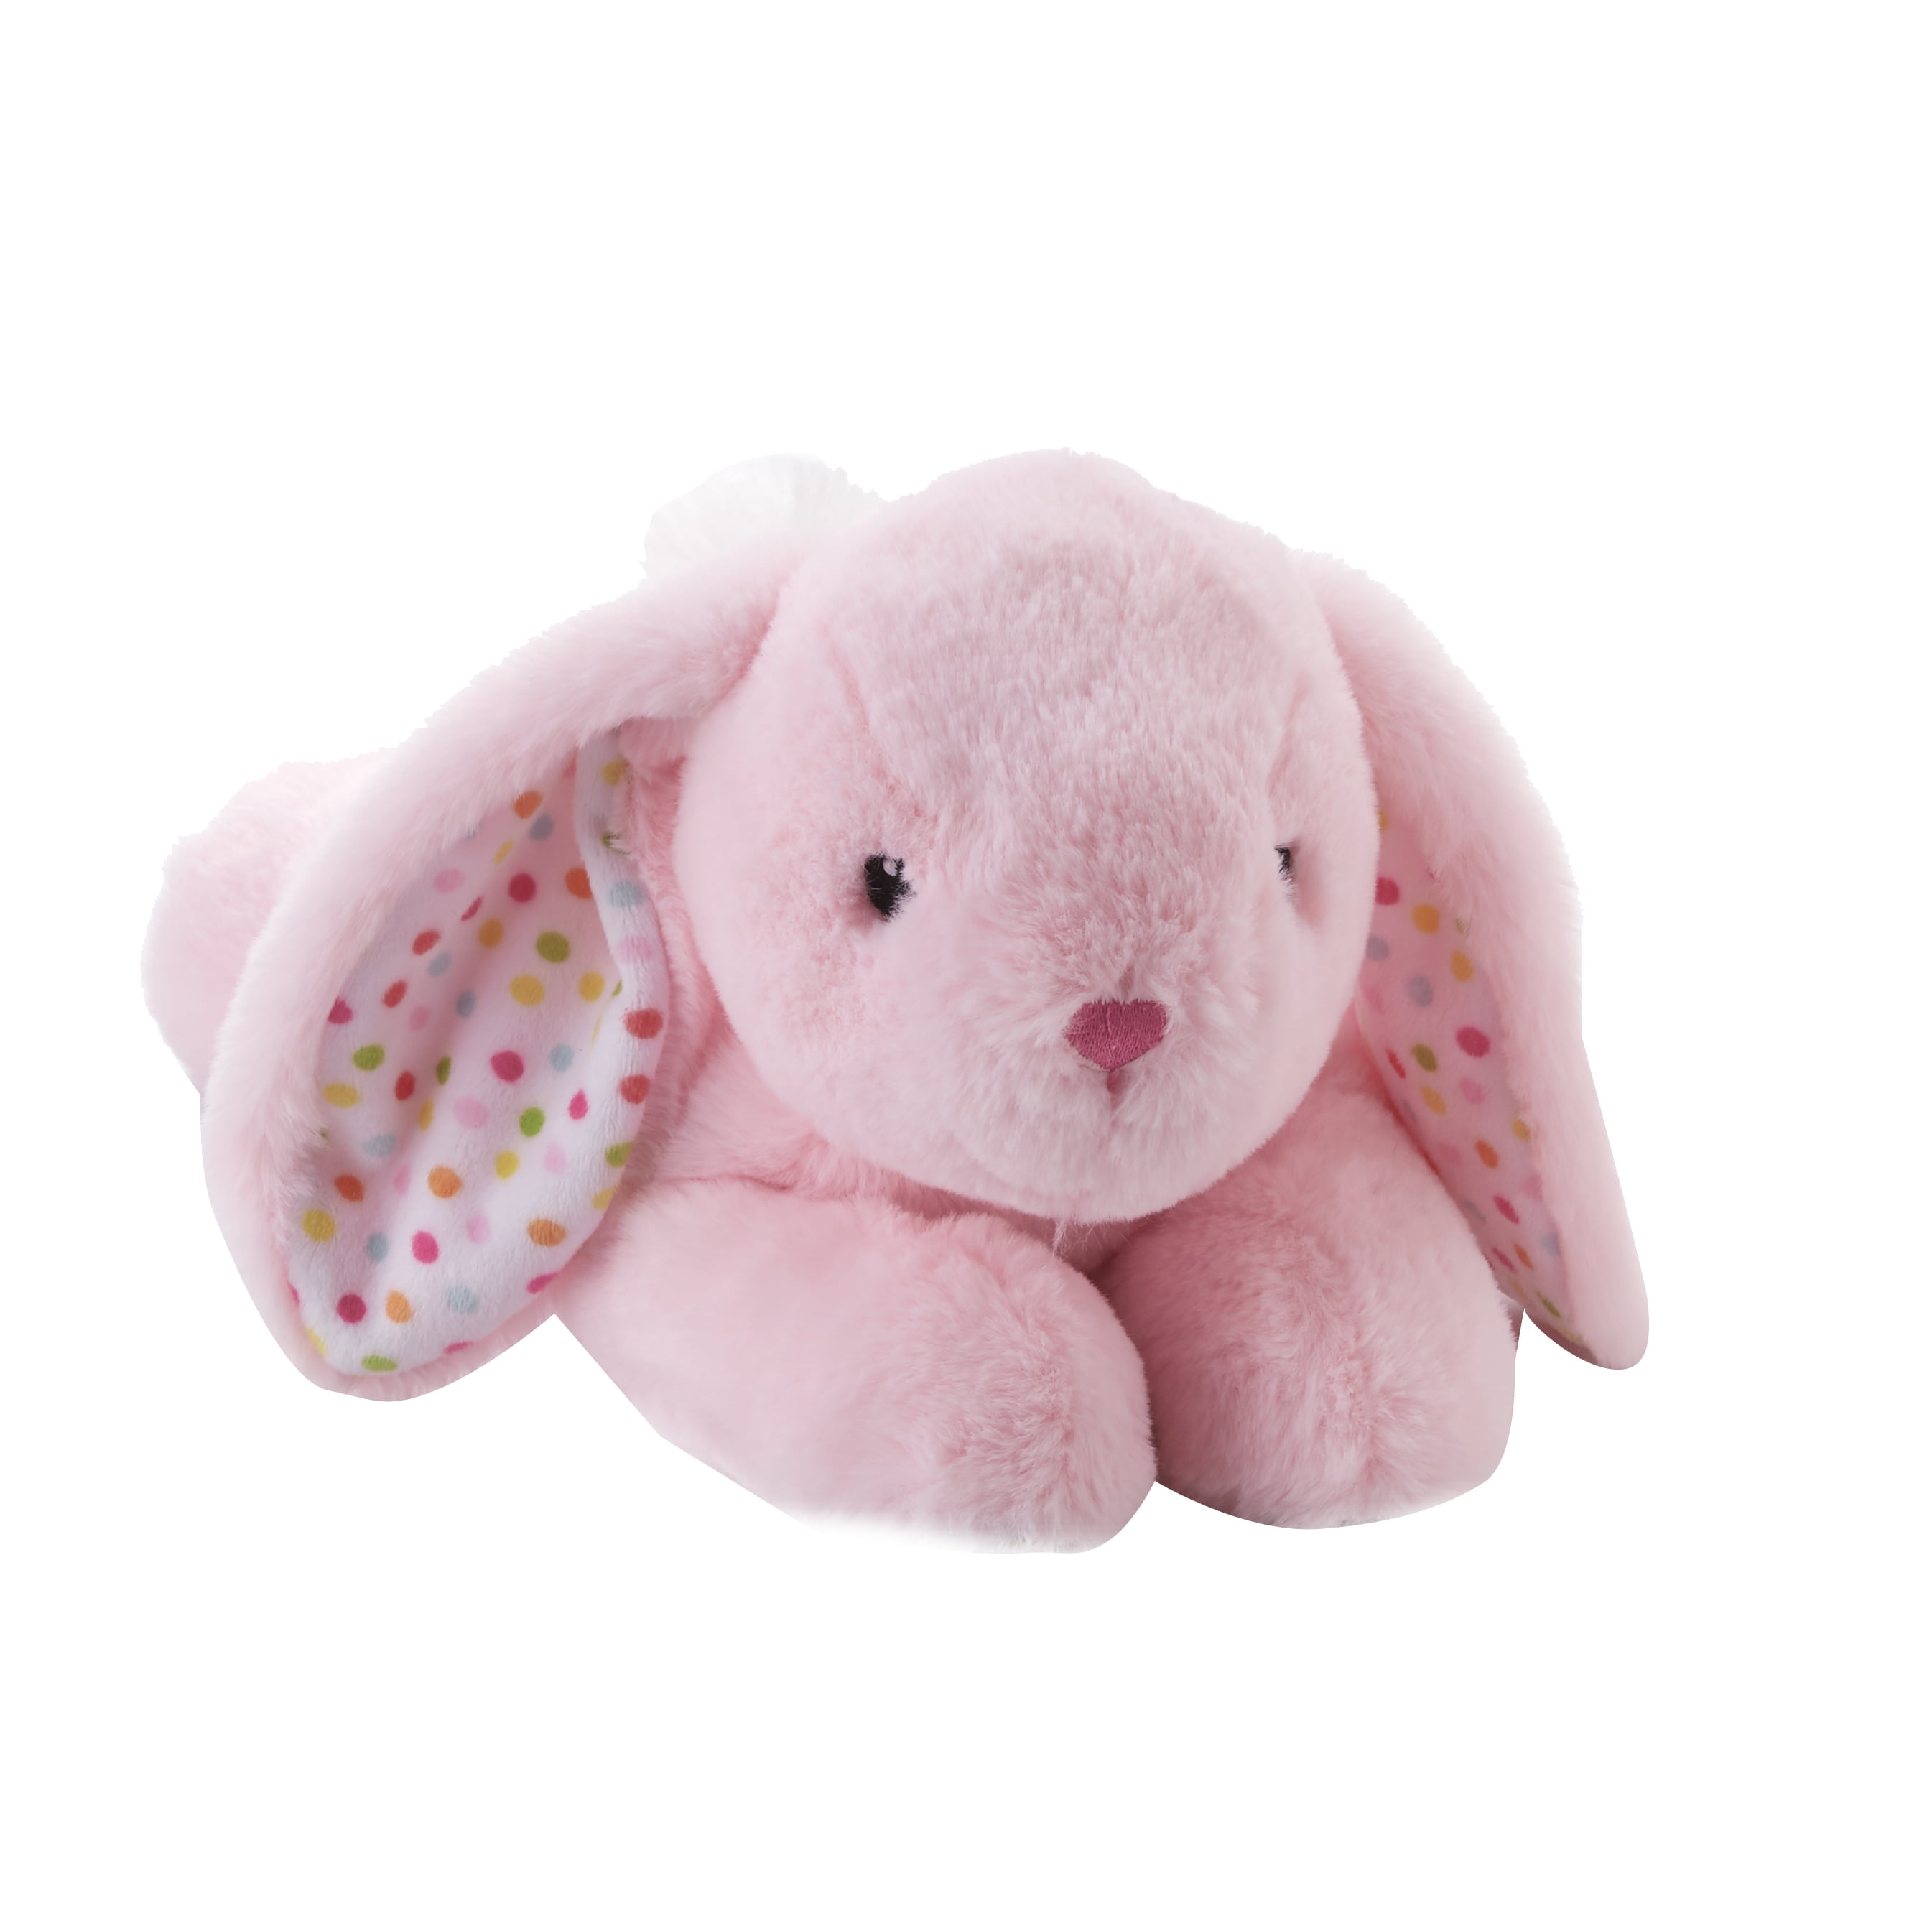 White & Purple Bunny Plush Stuffed Animal w/ Floppy Ears & Polka Dot 12in 